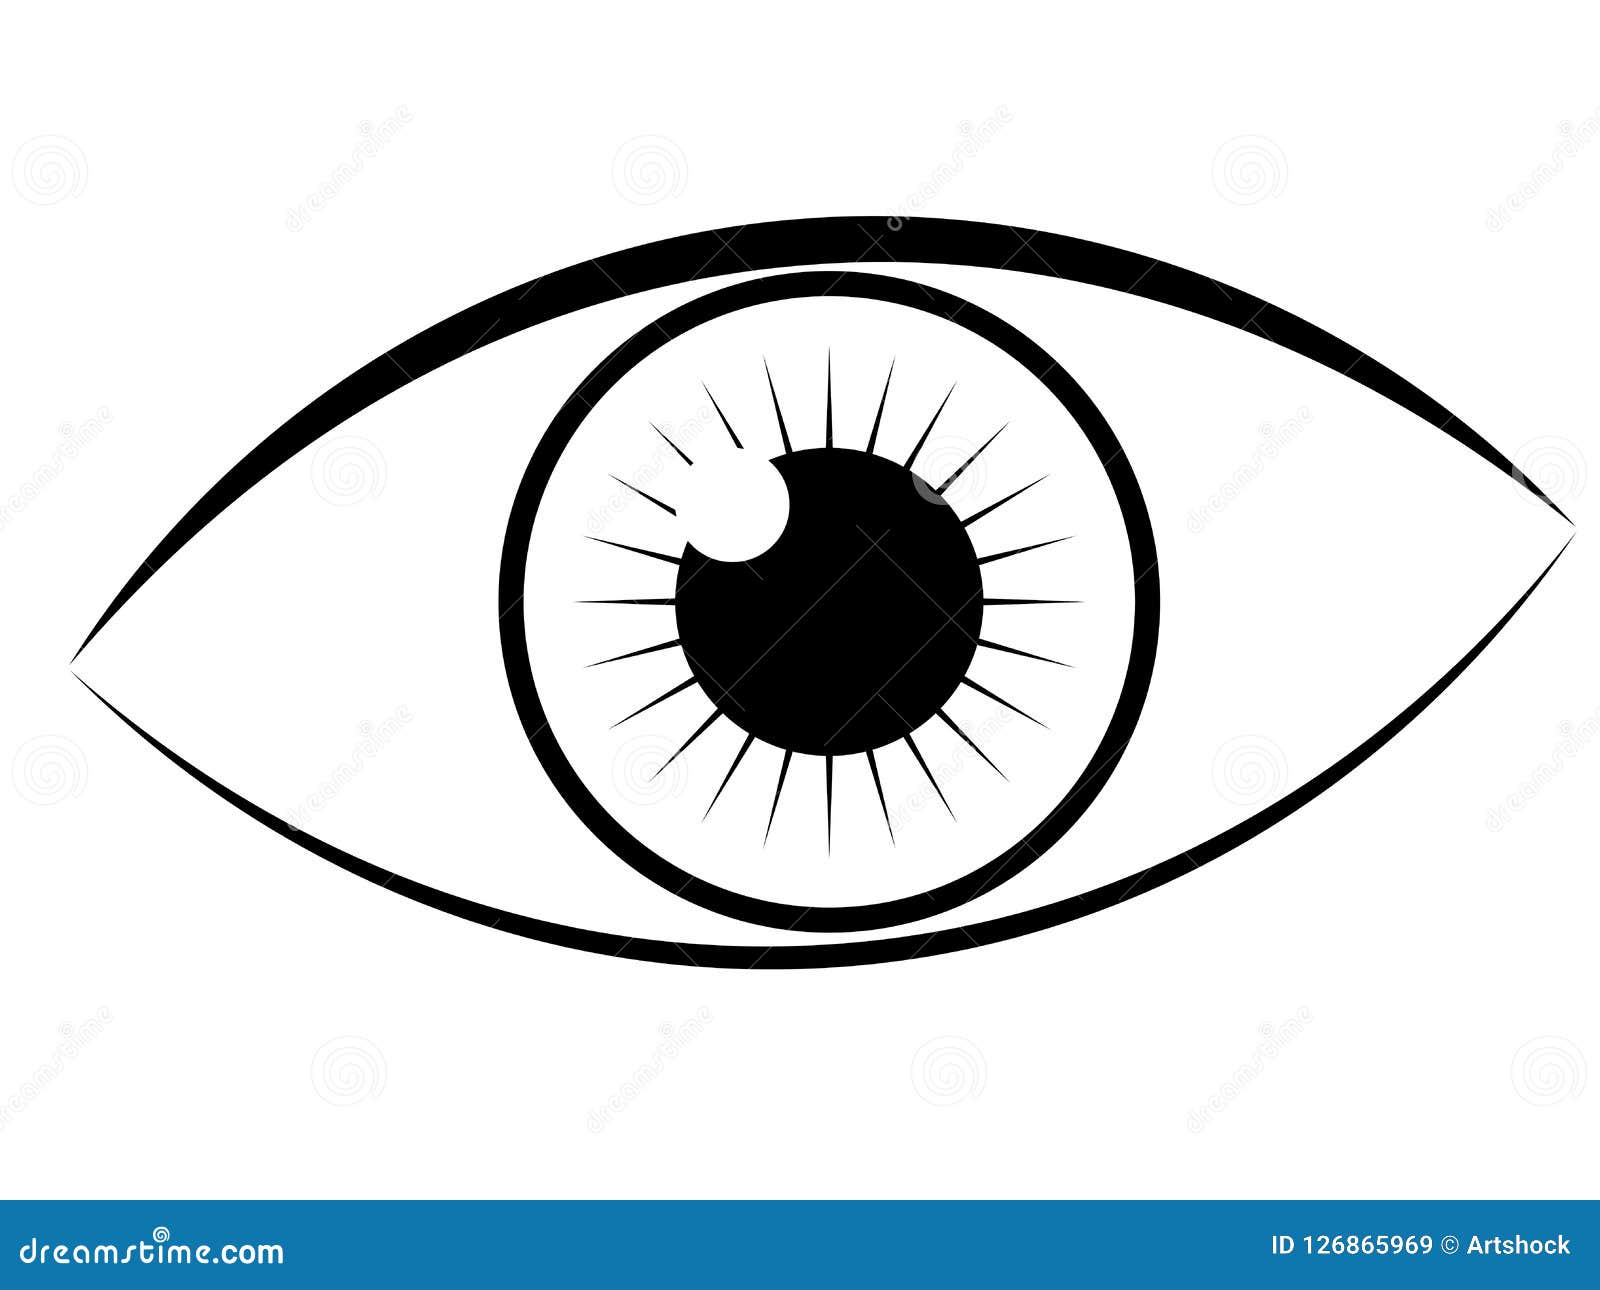 Simple eye lineart stock vector. Illustration of eyesight